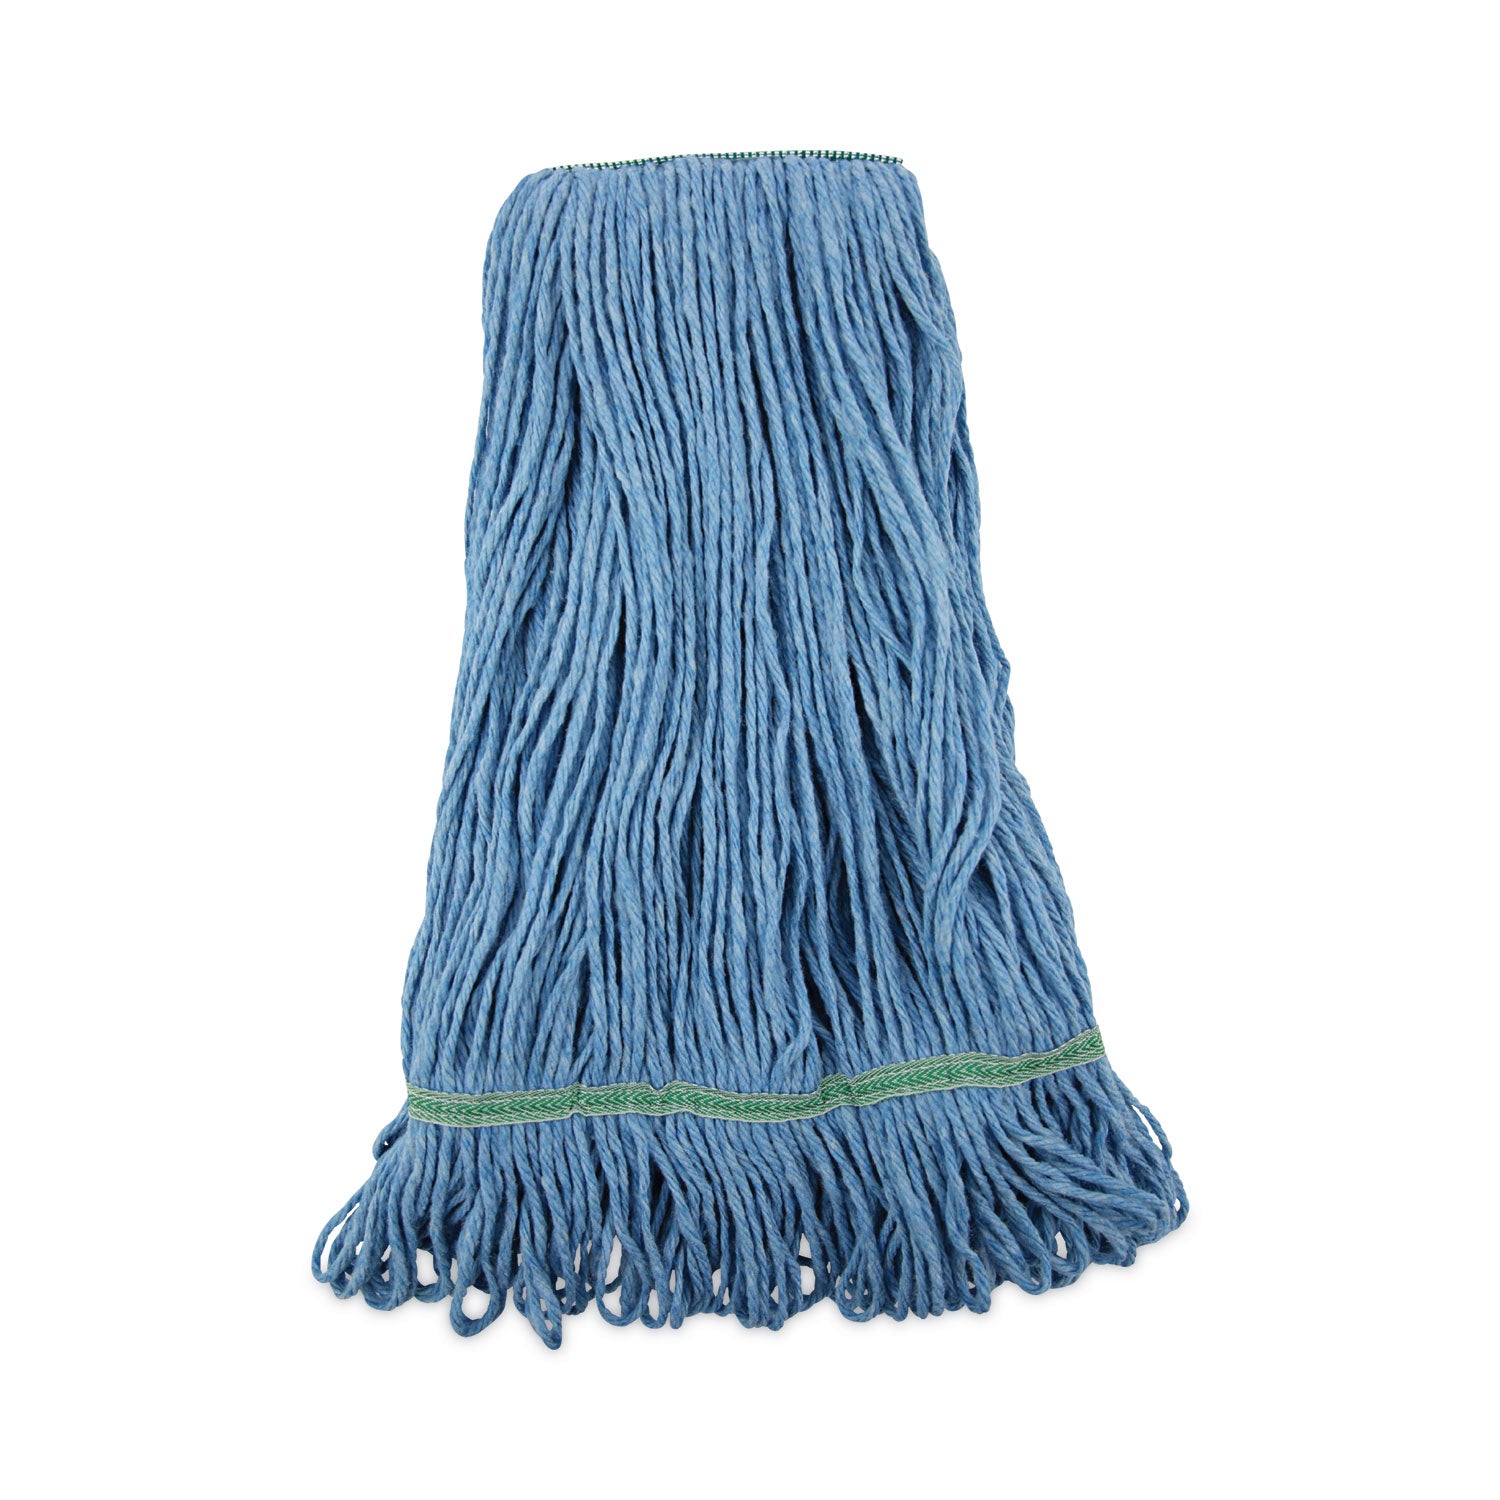 super-loop-wet-mop-head-cotton-synthetic-fiber-1-headband-medium-size-blue_bwk502blnb - 1